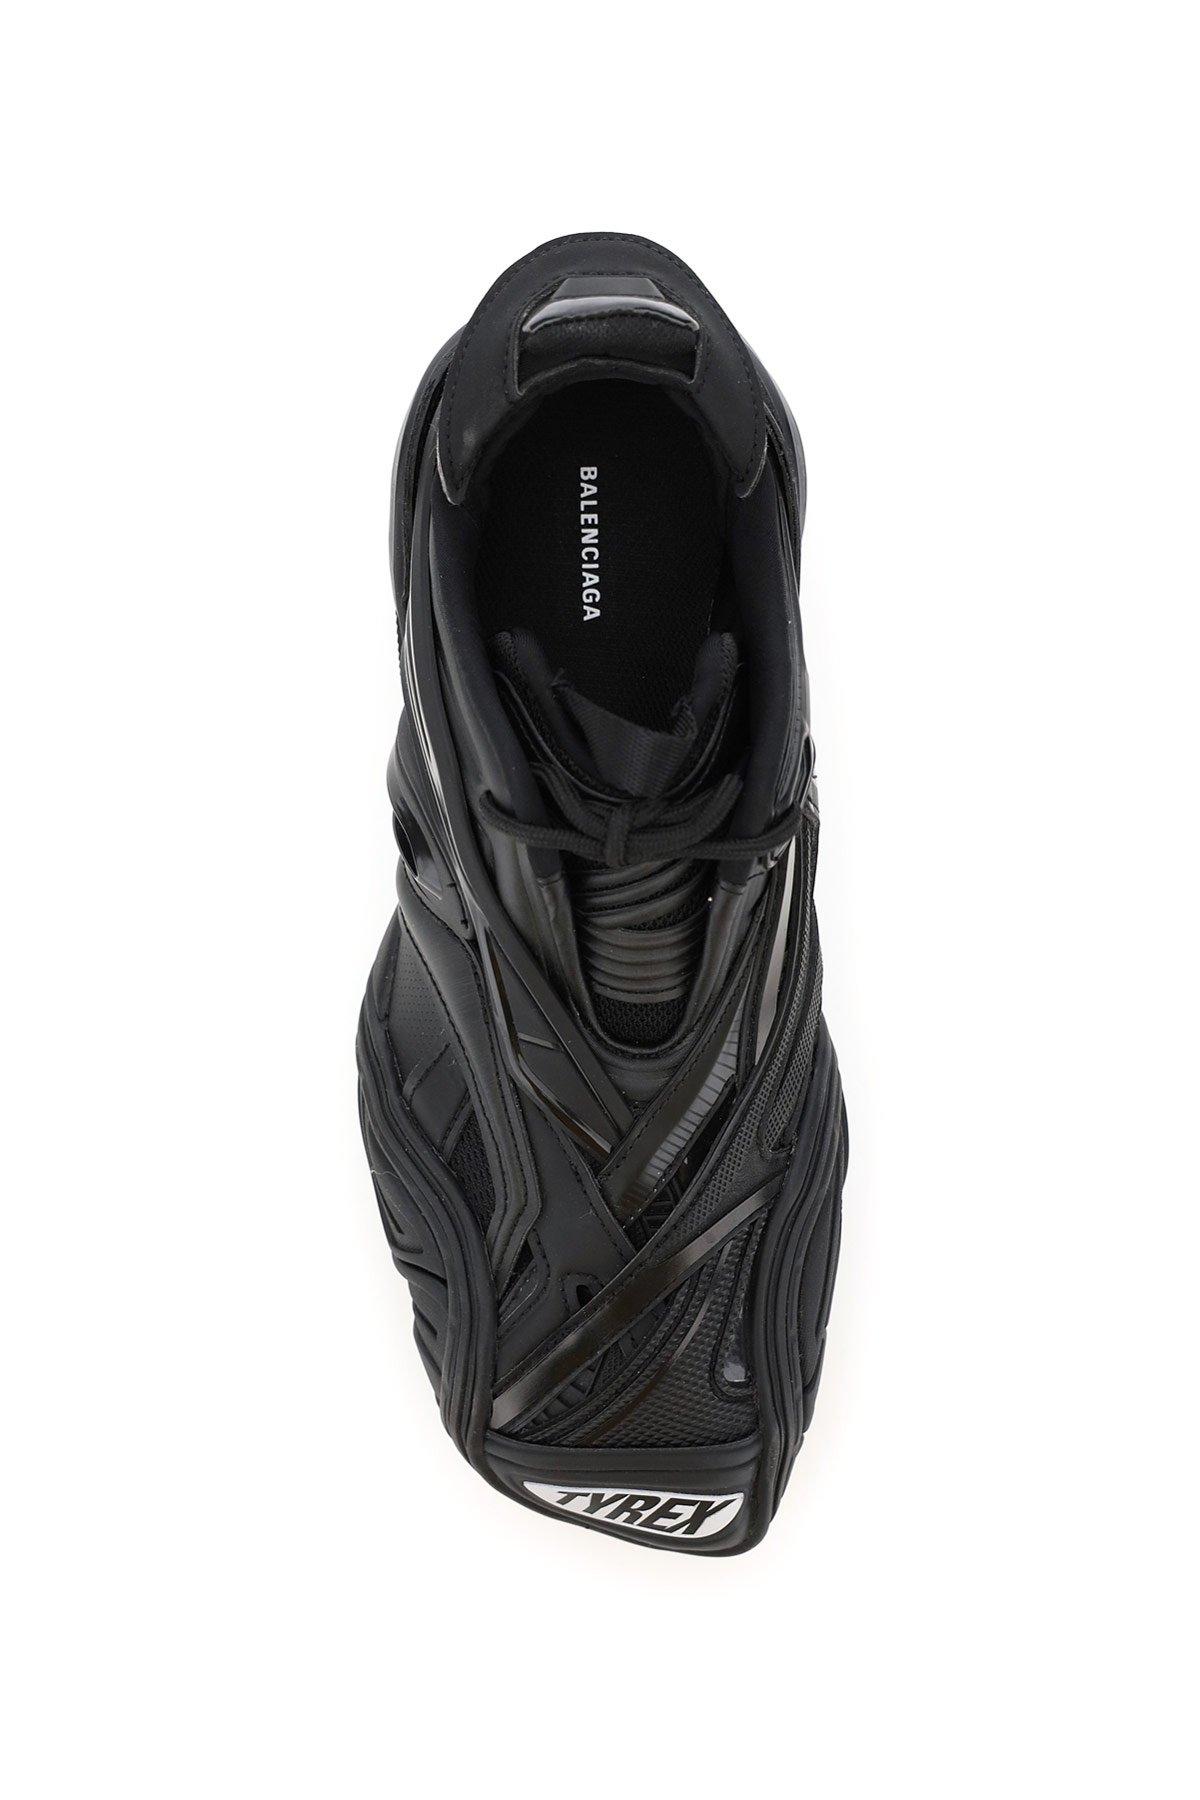 Balenciaga Synthetic Tyrex Sneakers in Black | Lyst